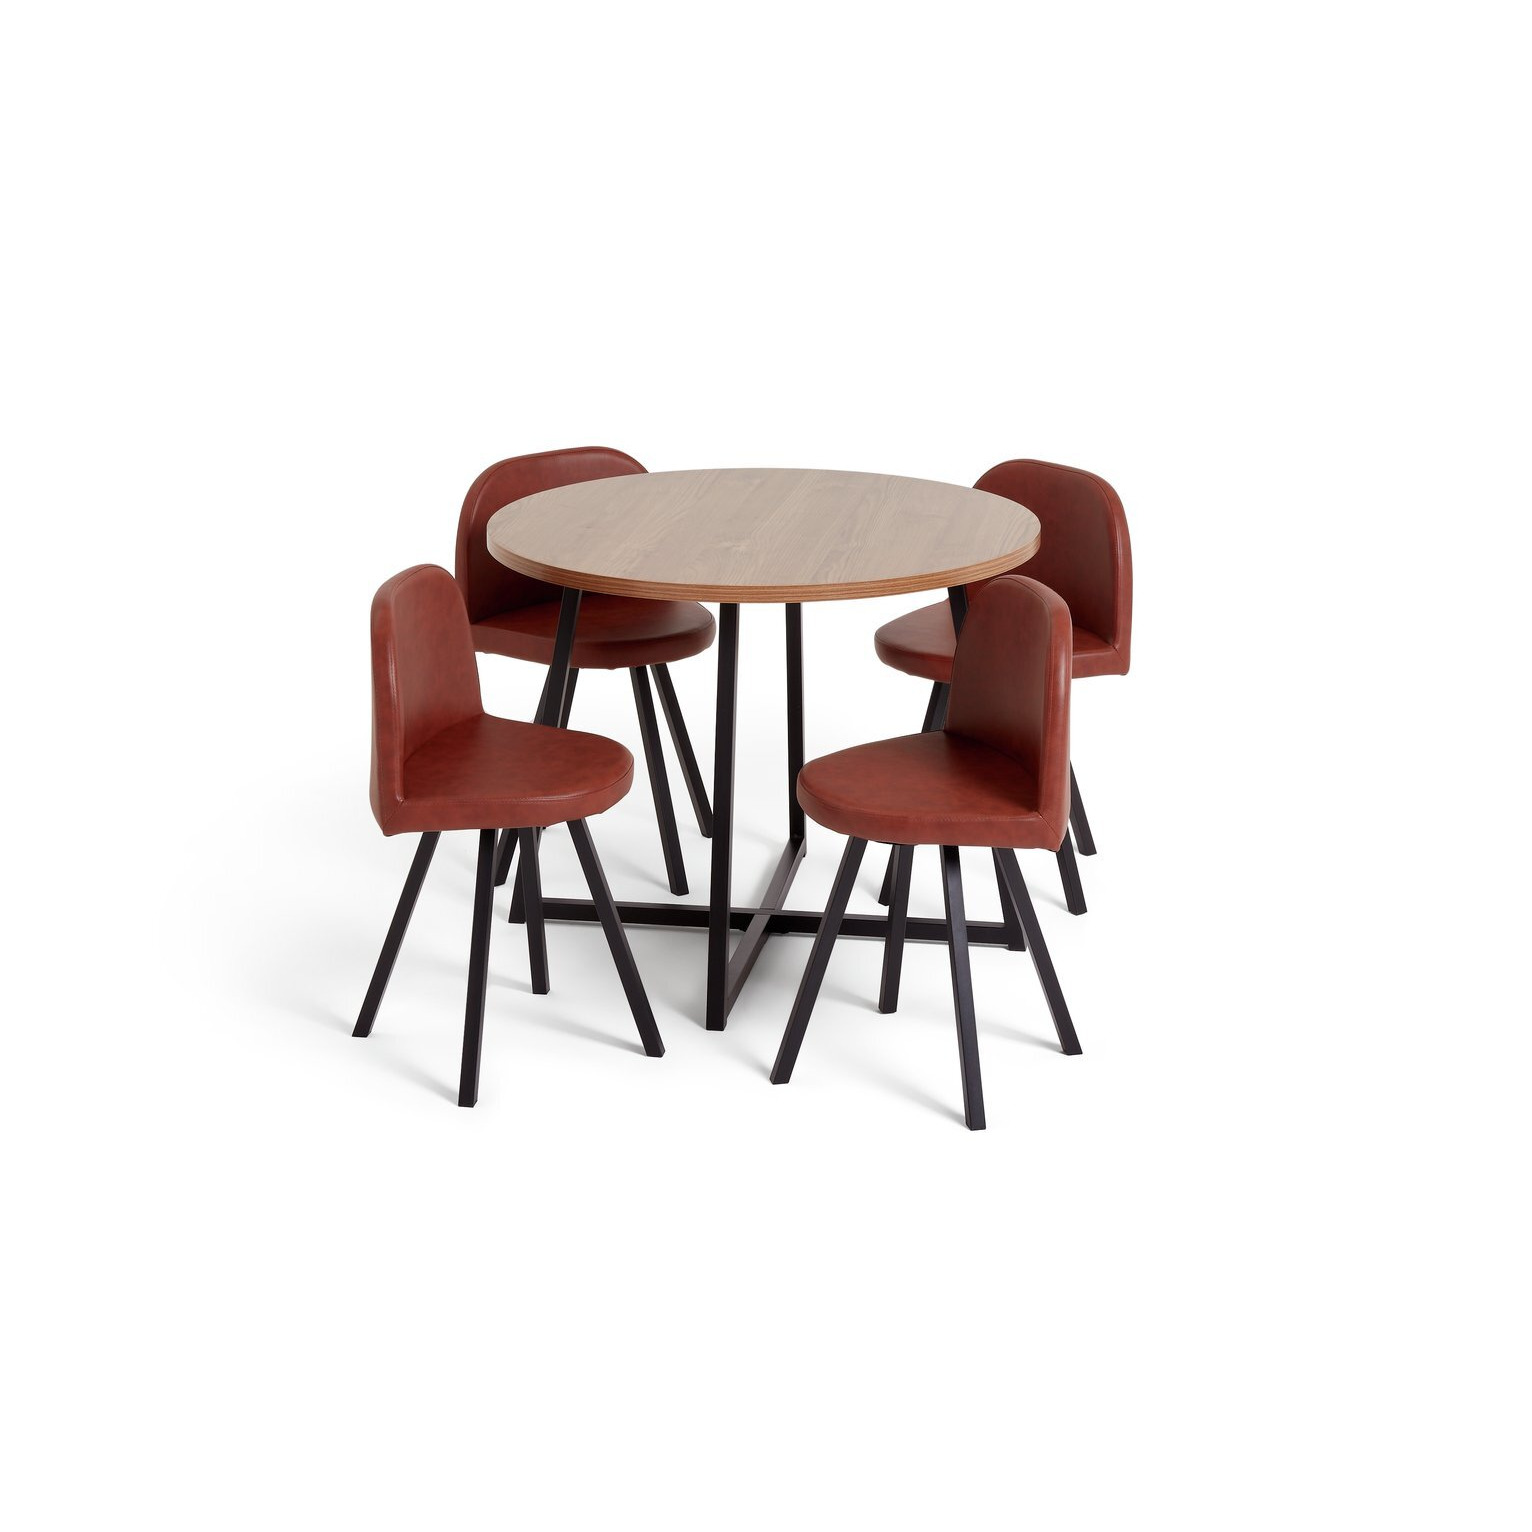 Habitat Nomad Oak Effect Dining Table & 4 Chairs - image 1